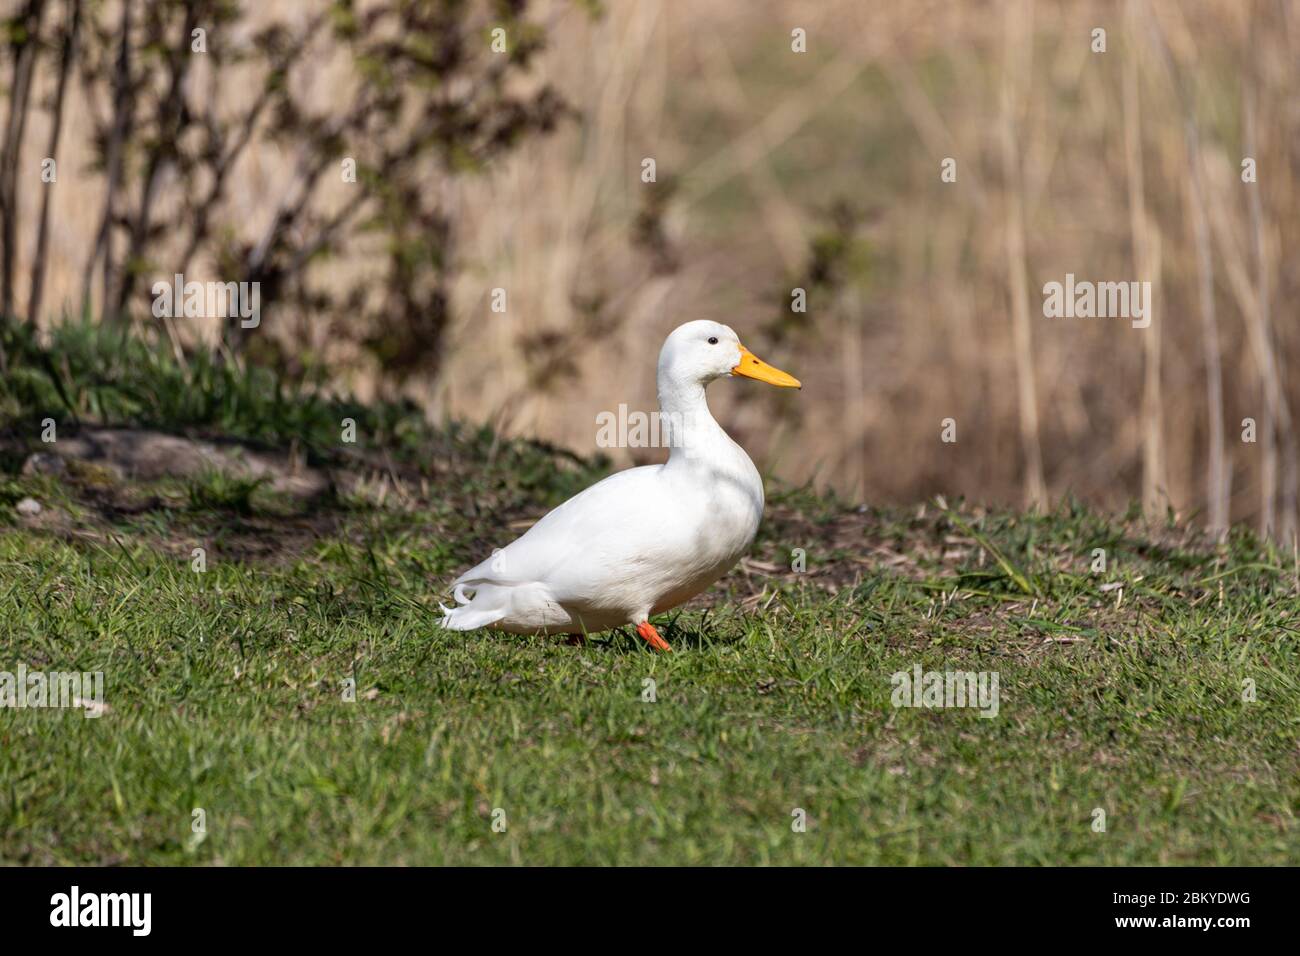 White drake or male mallard duck, a well-known resident of Töölönlahti Bay in Helsinki, Finland Stock Photo